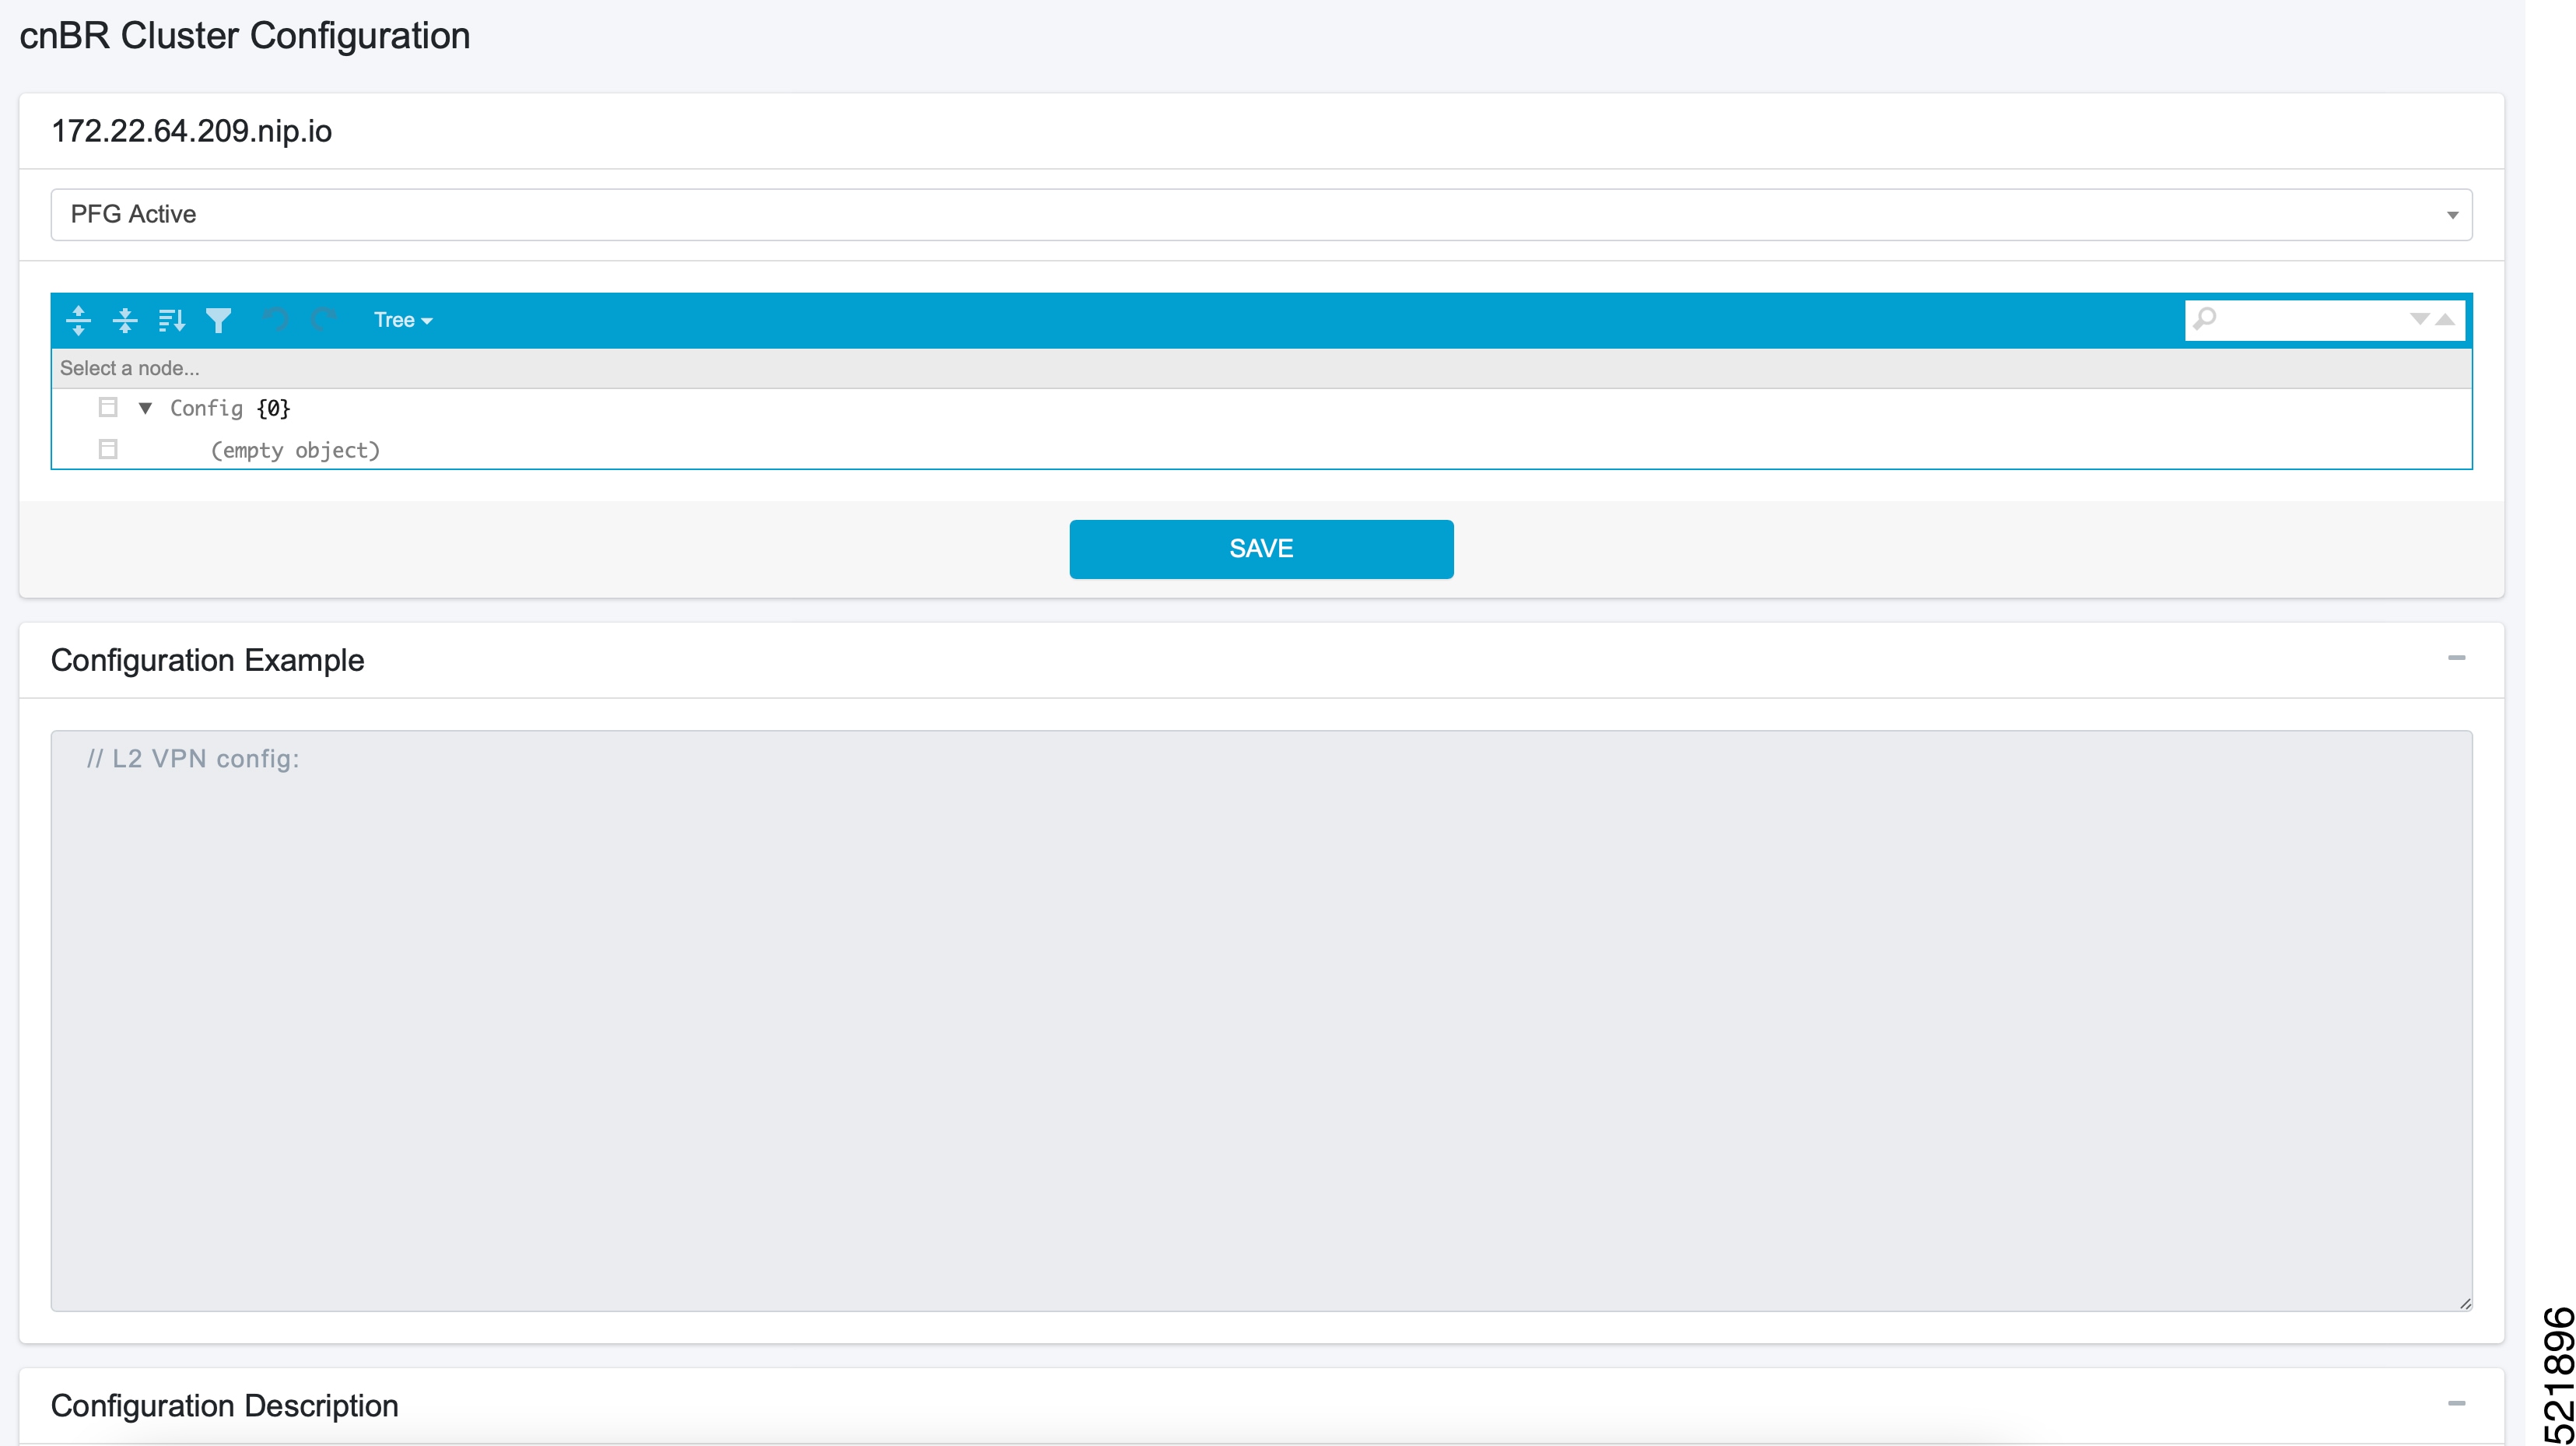 The screenshot displays the PFG Active Configuration